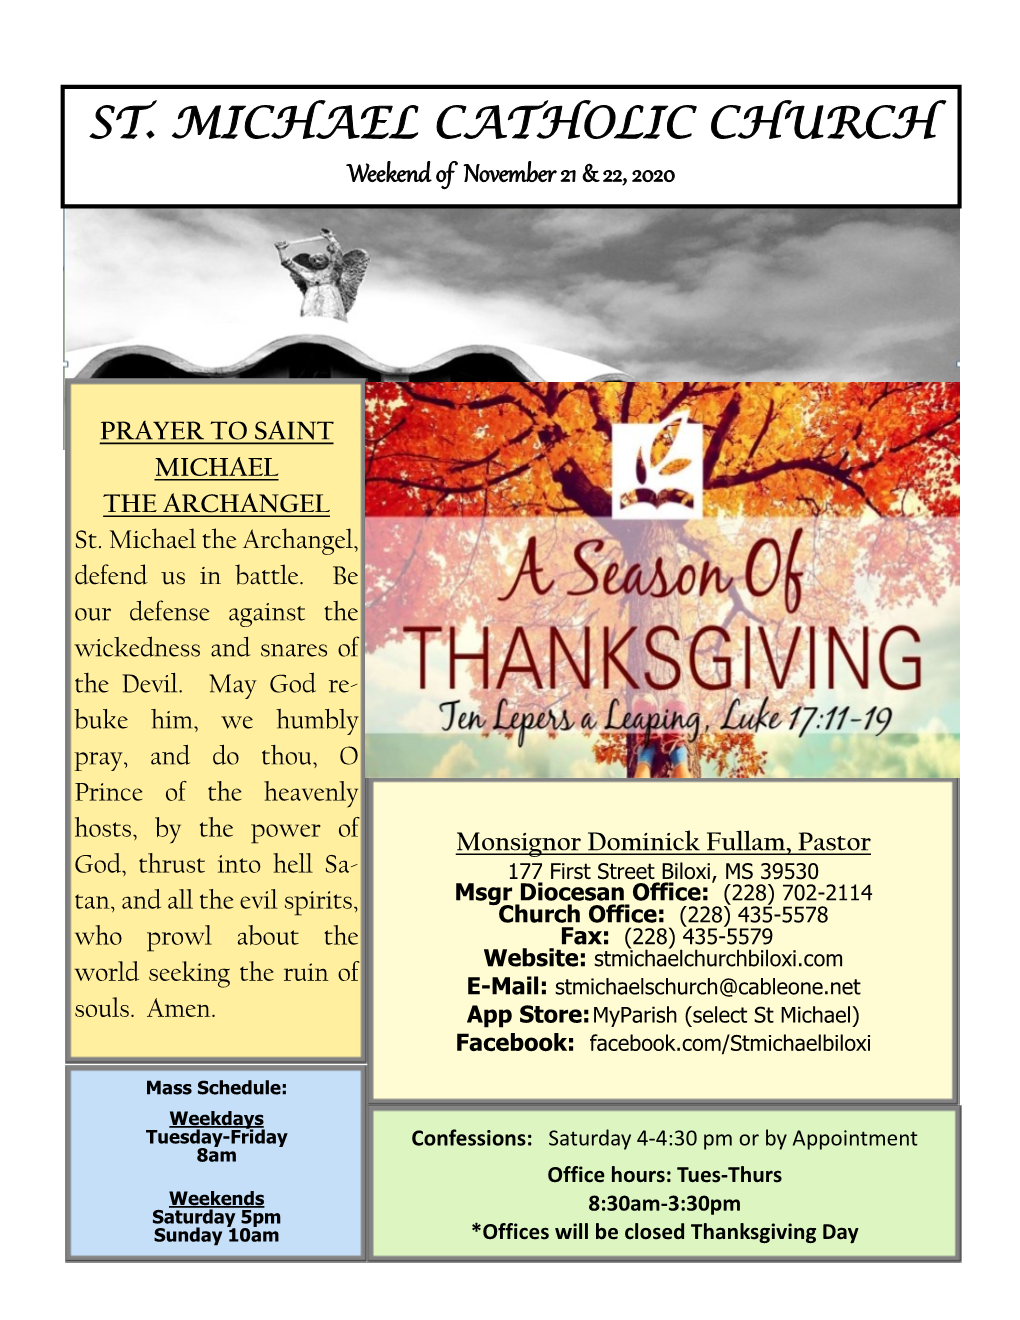 ST. MICHAEL CATHOLIC CHURCH Weekend of November 21 & 22, 2020